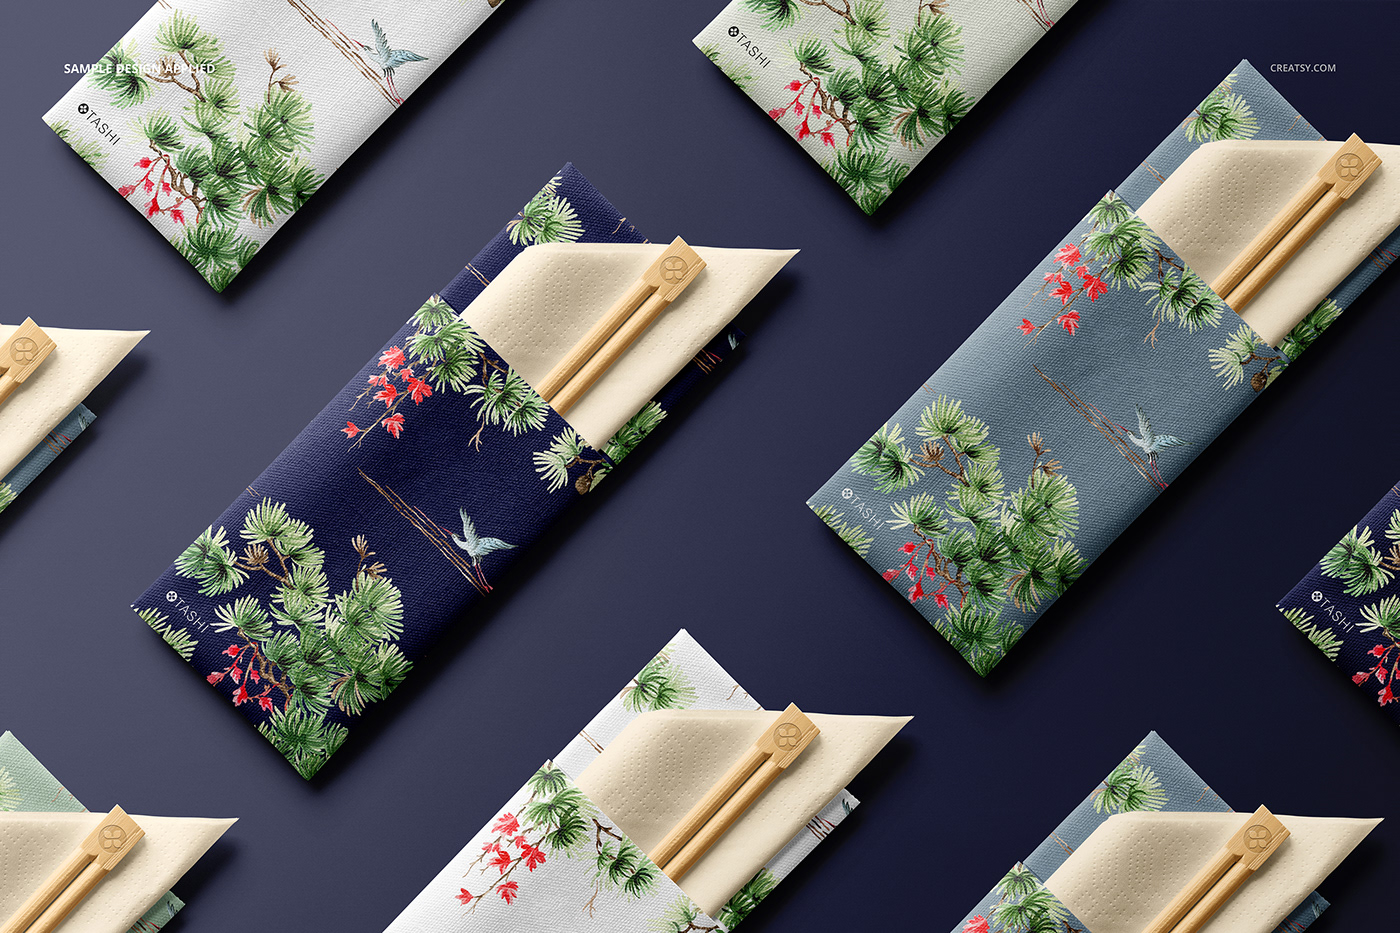 chopsticks creatsy japanese mock-up Mockup mockups napkin napkins Sushi template